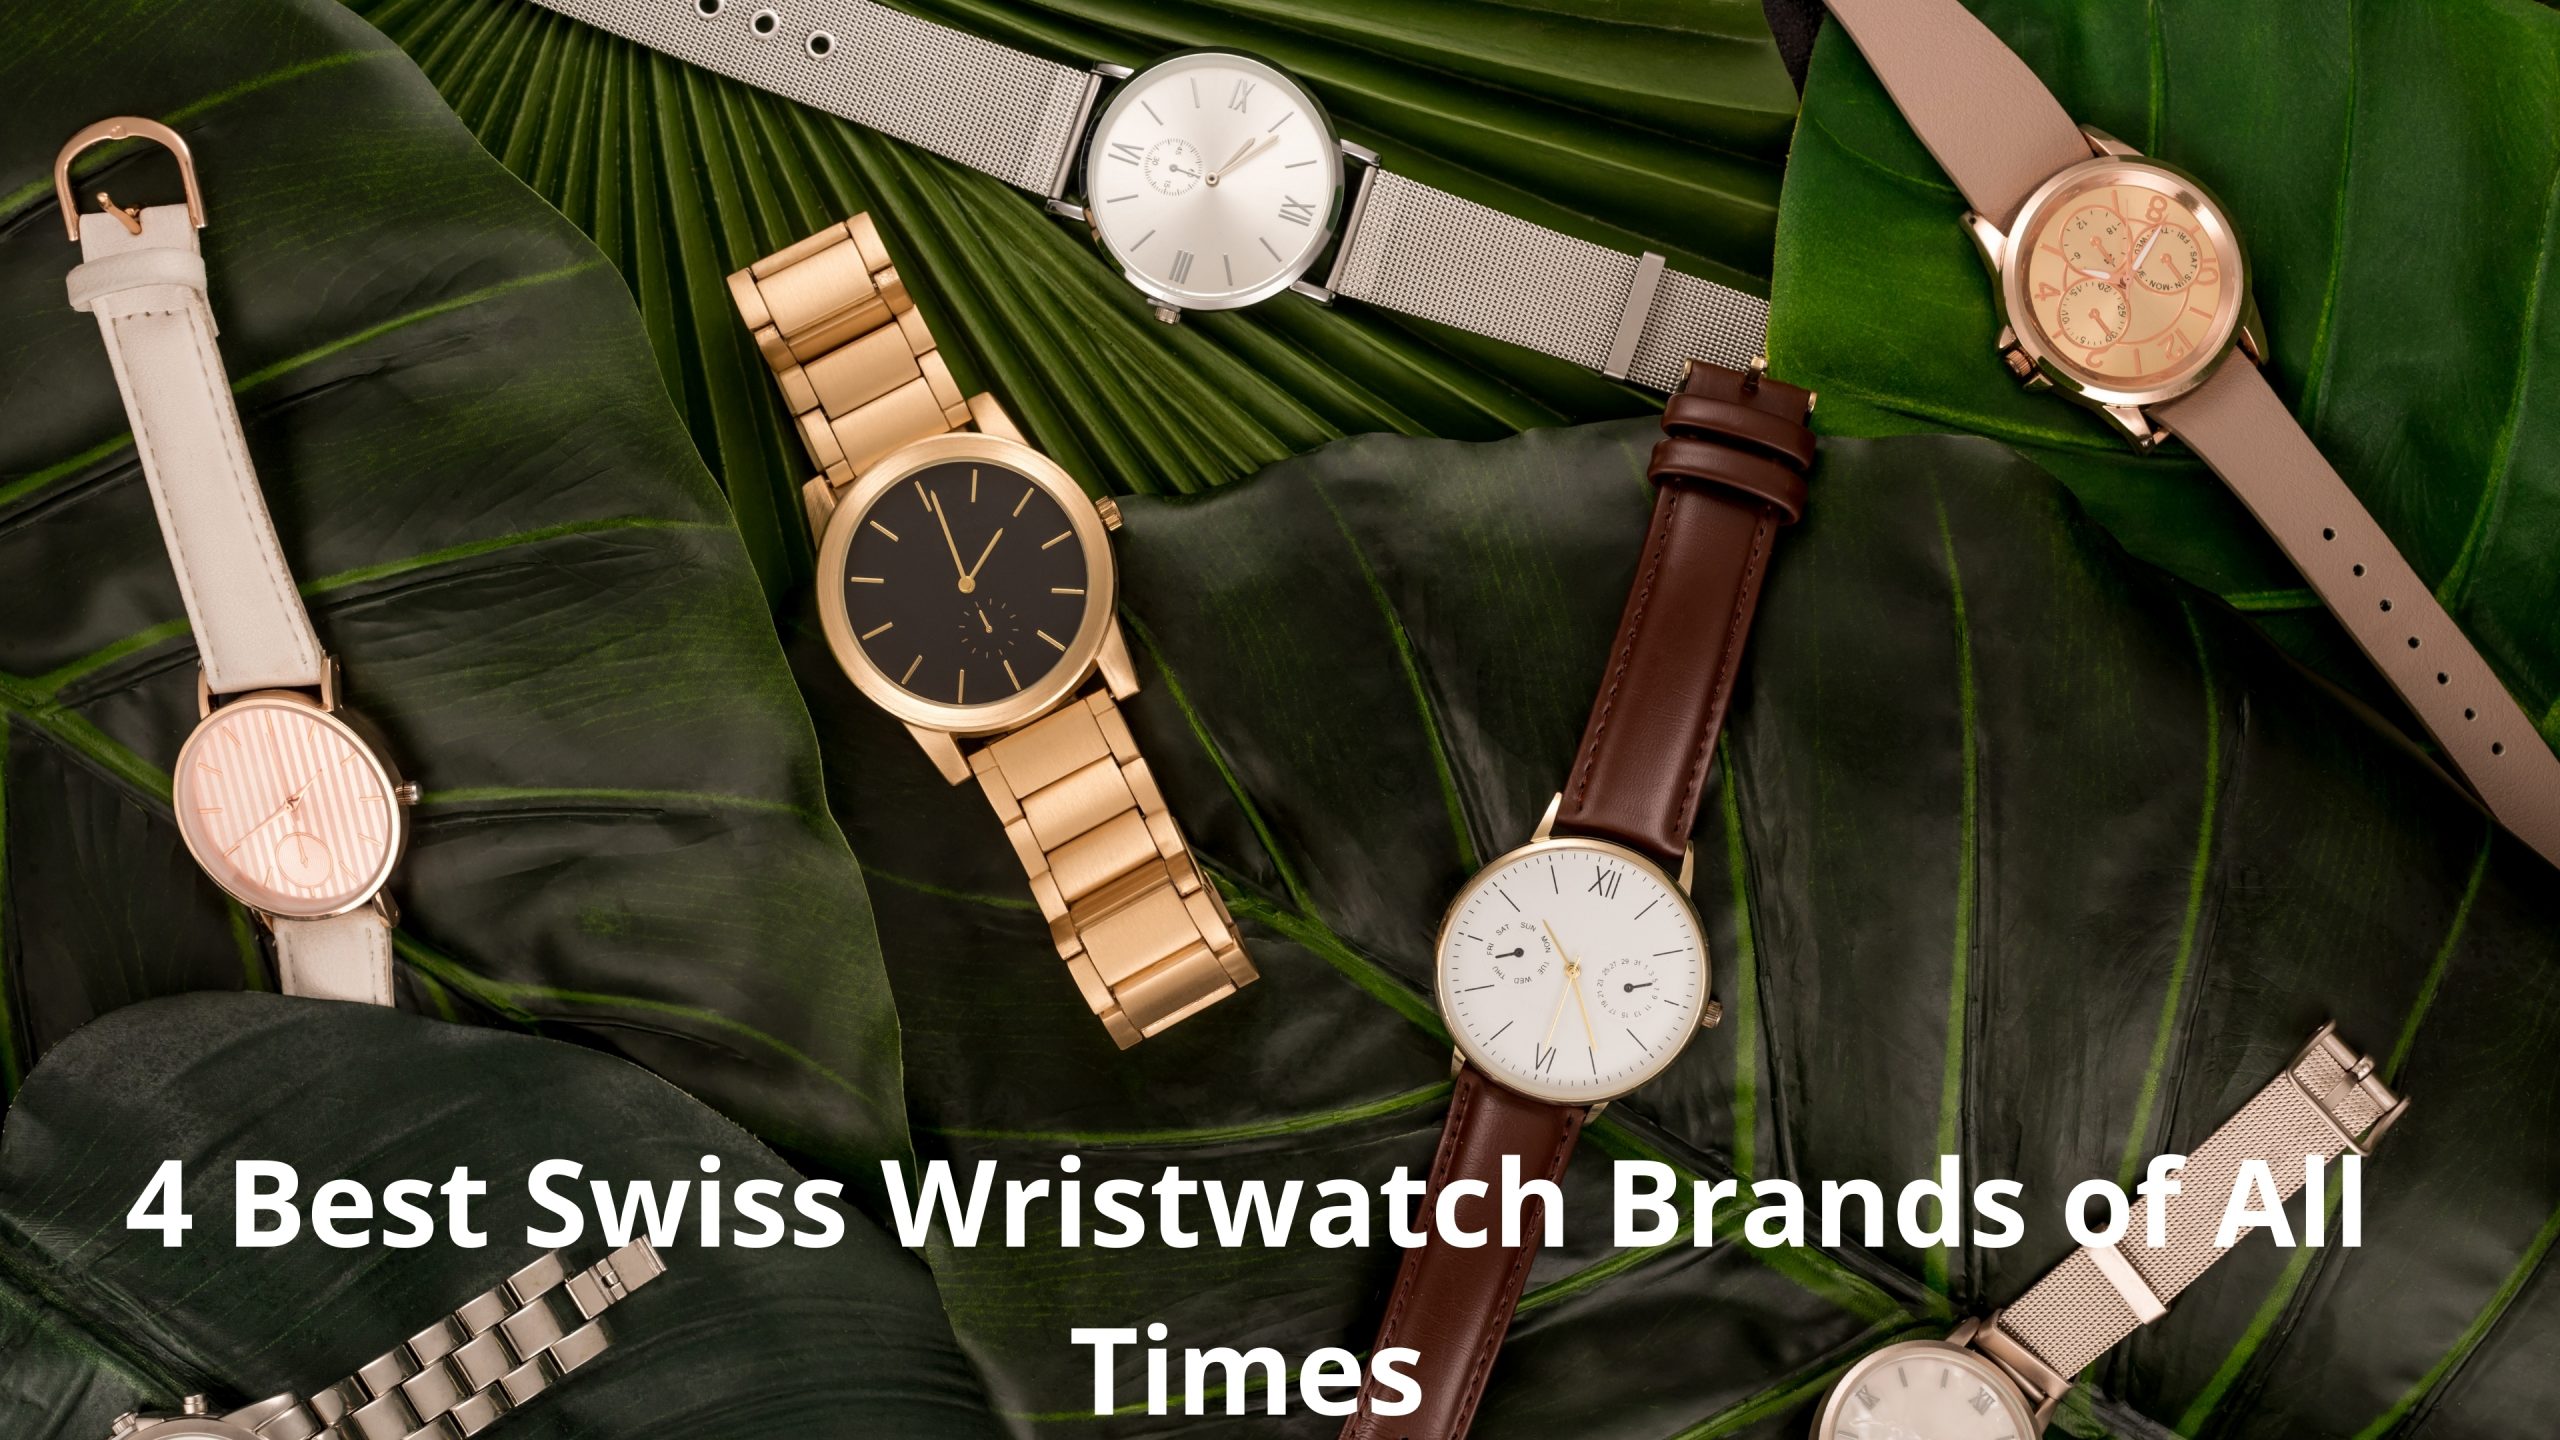 Best Swiss Wristwatch Brands of All Times